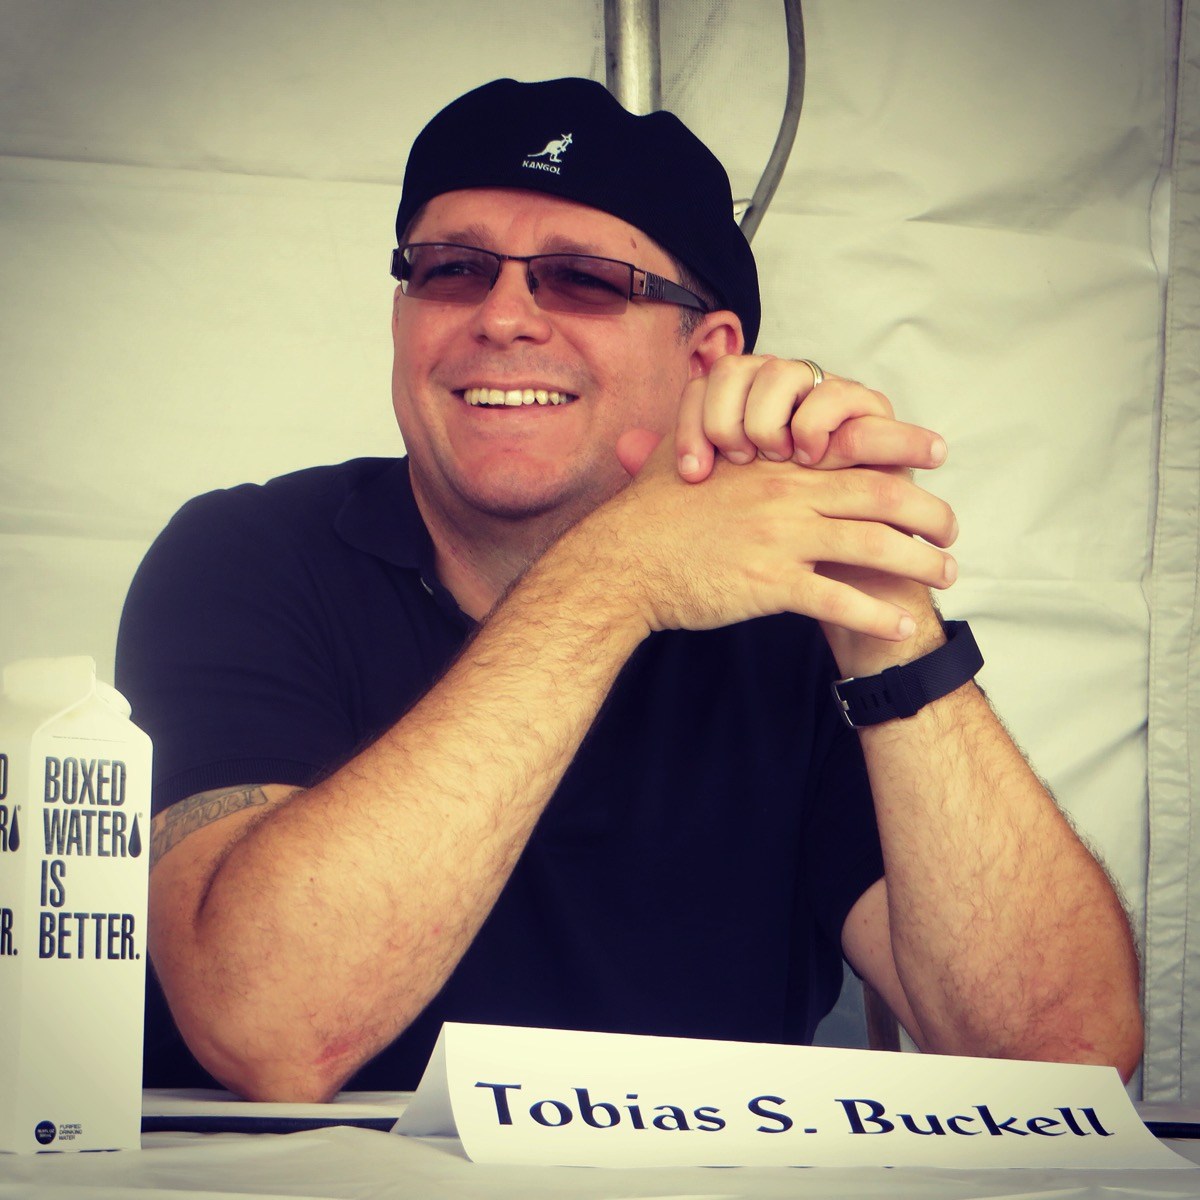 Tobias S. Buckell